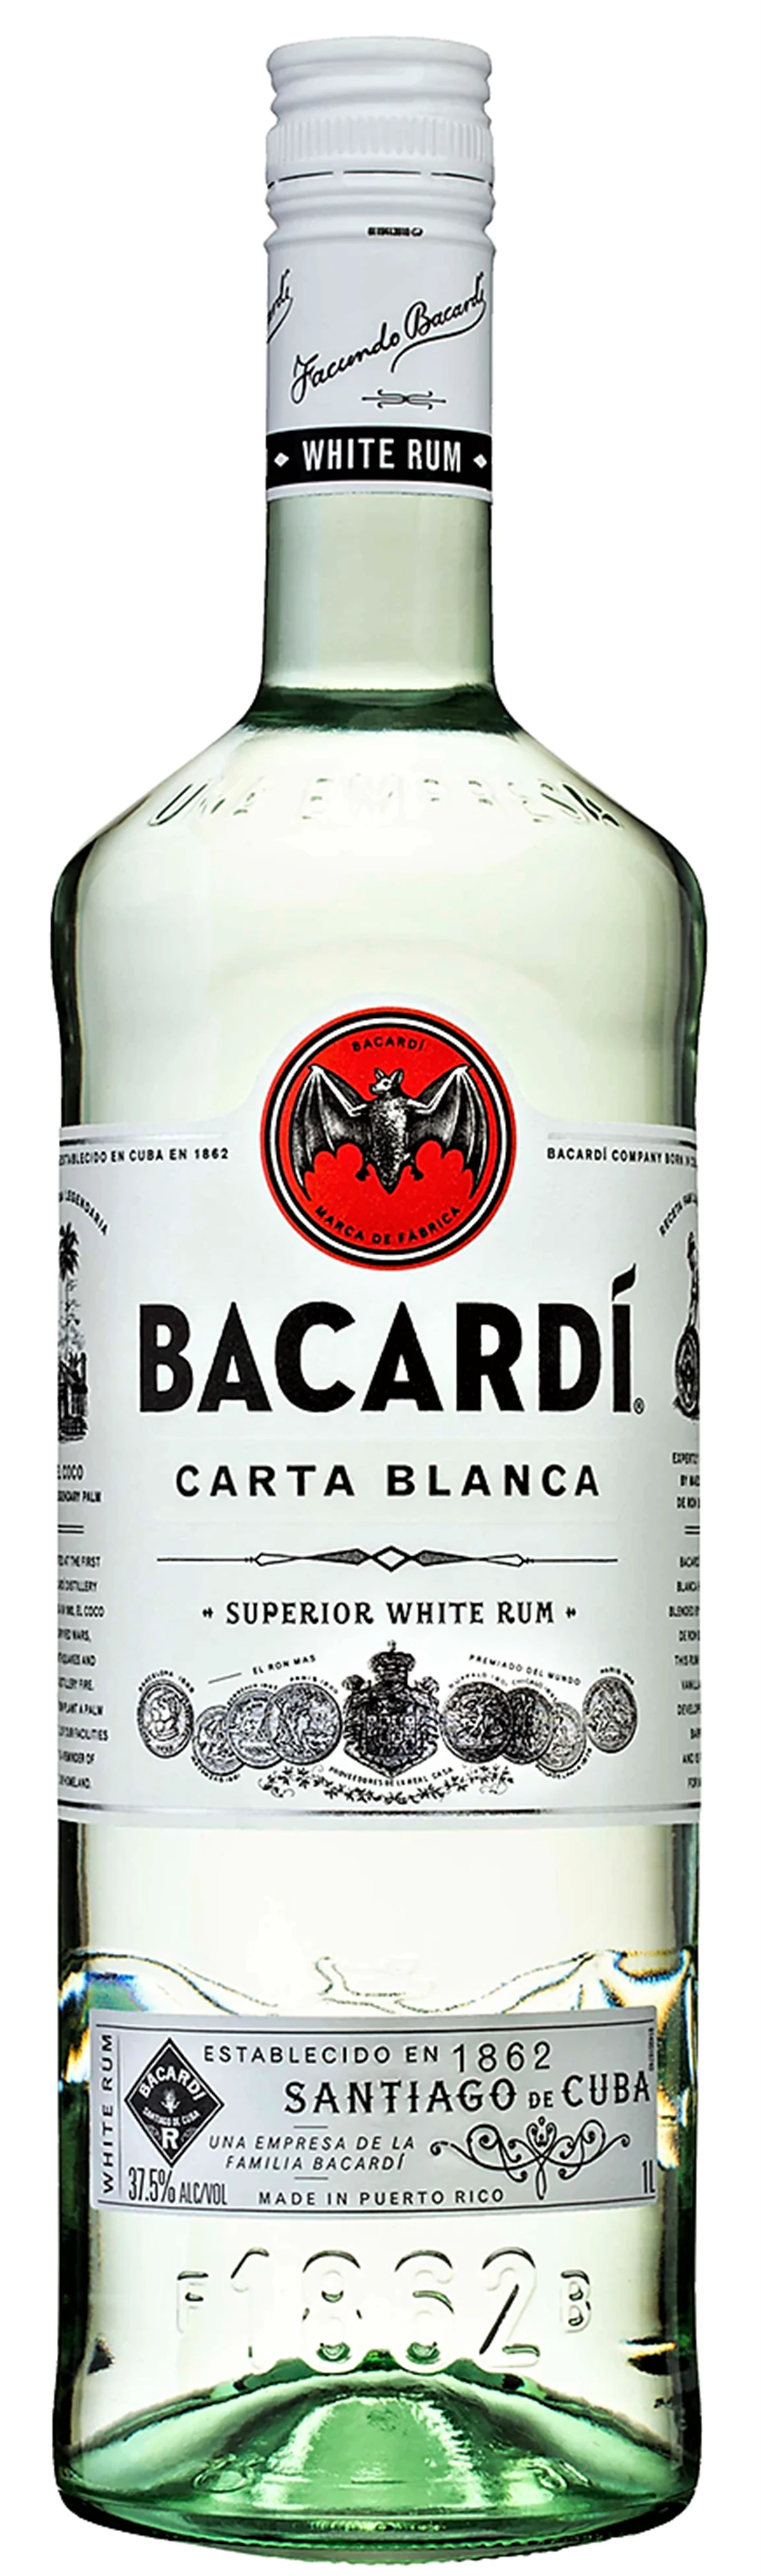 Bacardi_carta-negra-blanca-white-rum-70cl